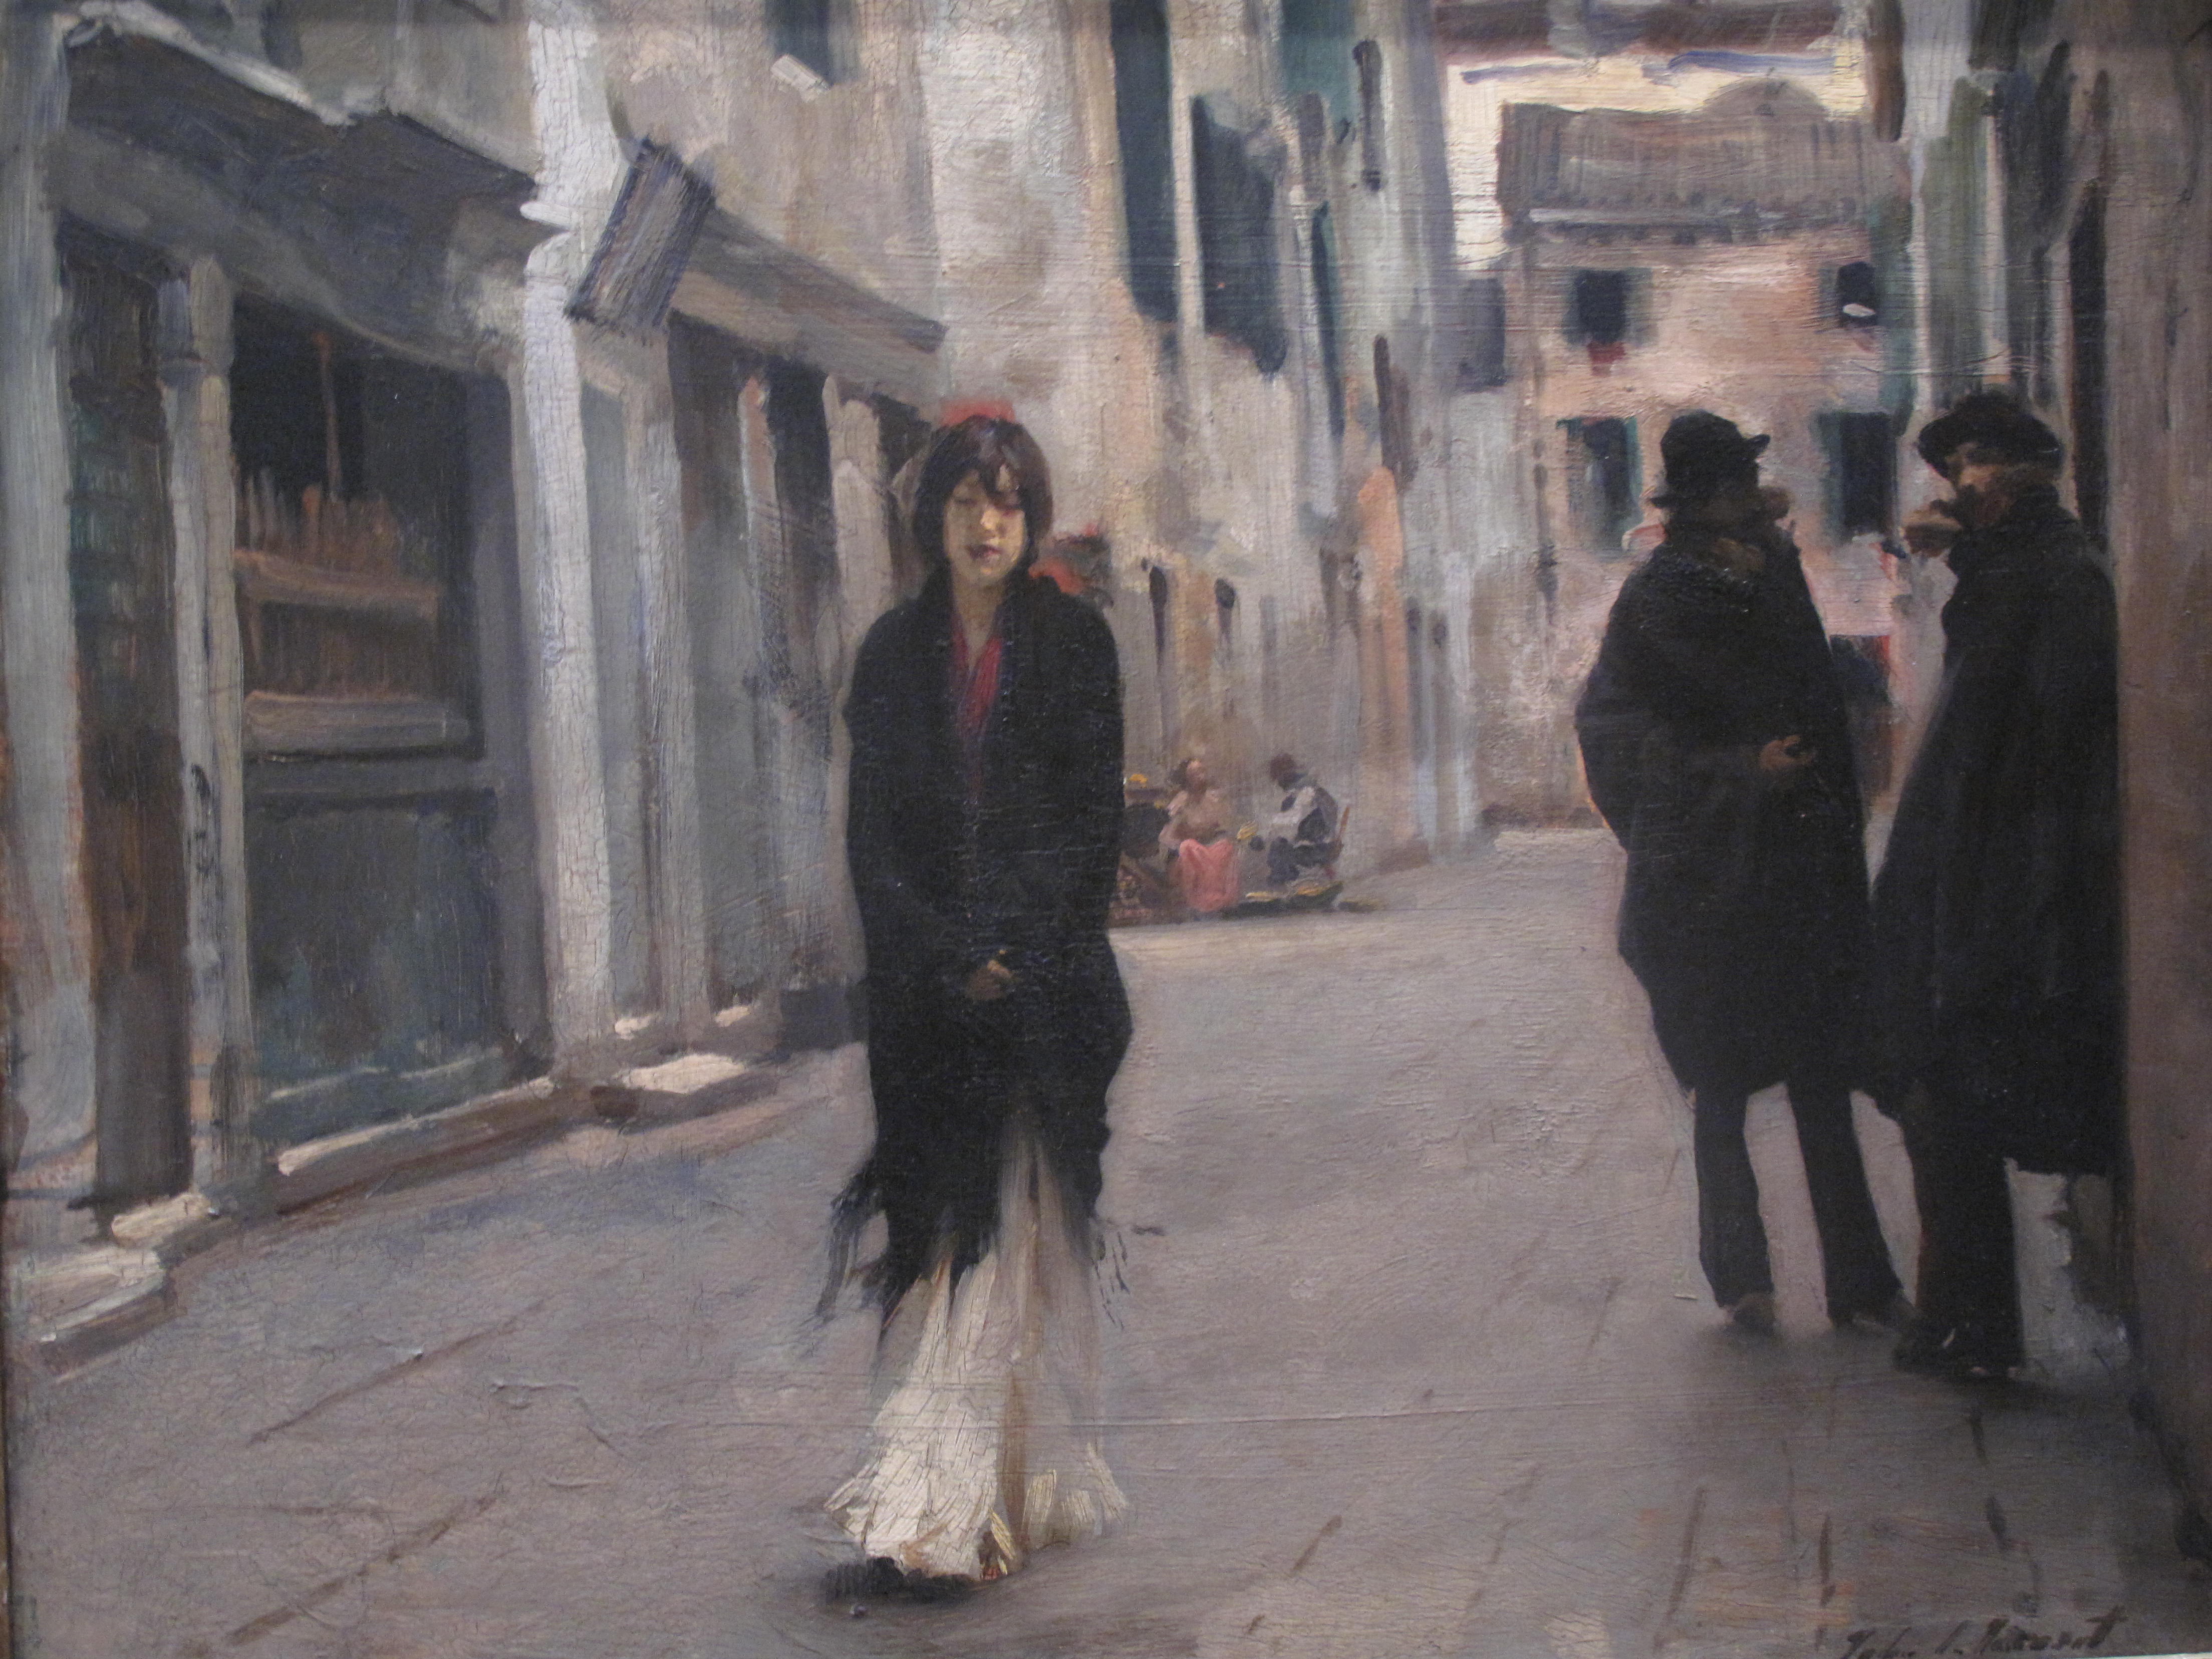 Street in Venice - John Singer Sargent- National Gallery of Art